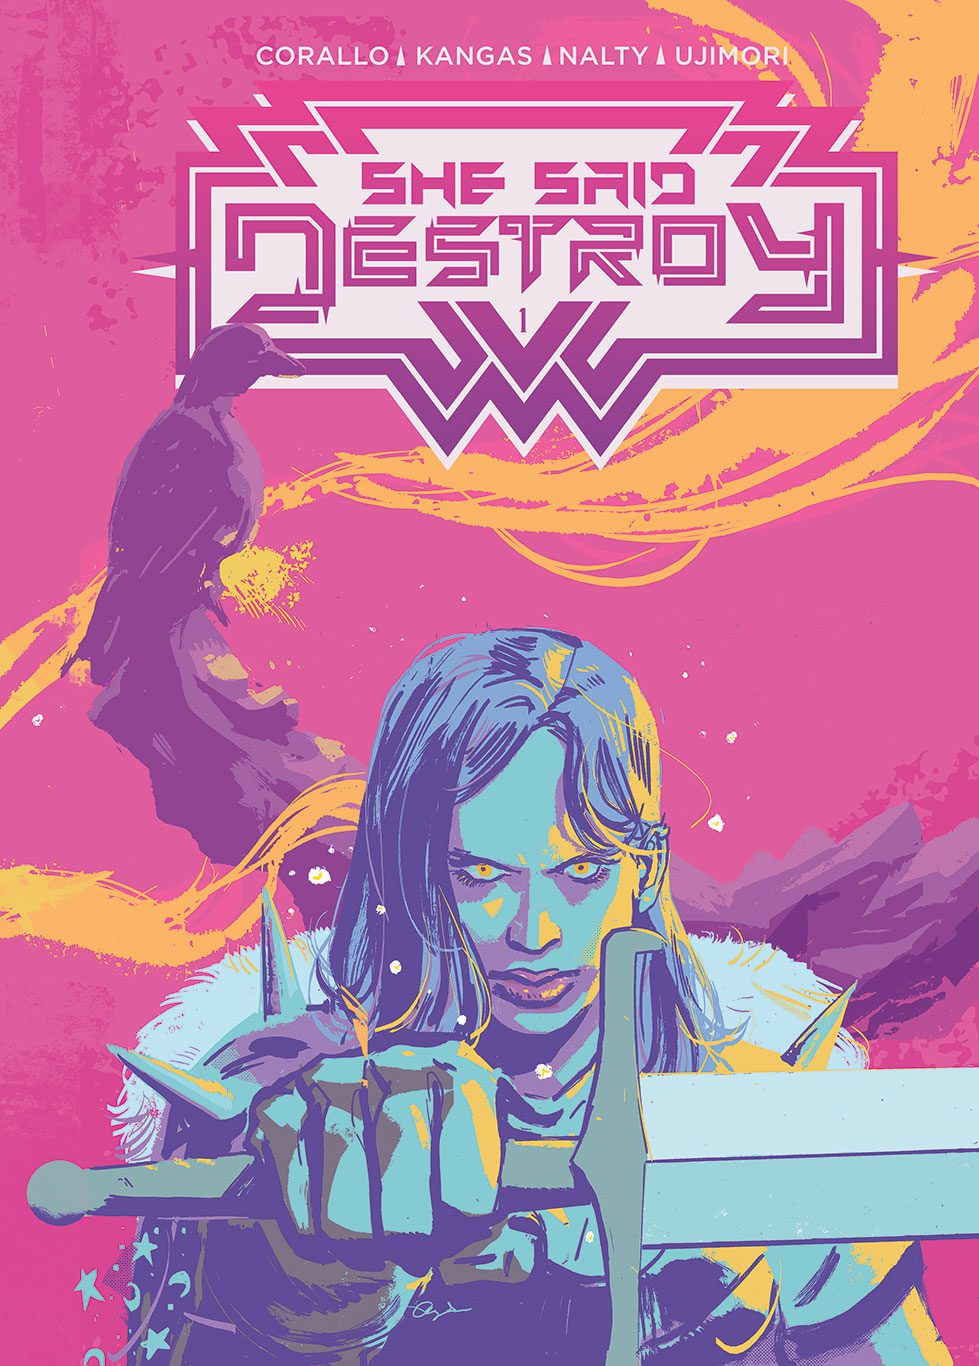 SHE SAID DESTROY #1 (Jetpack Comics / FP Exclusive)